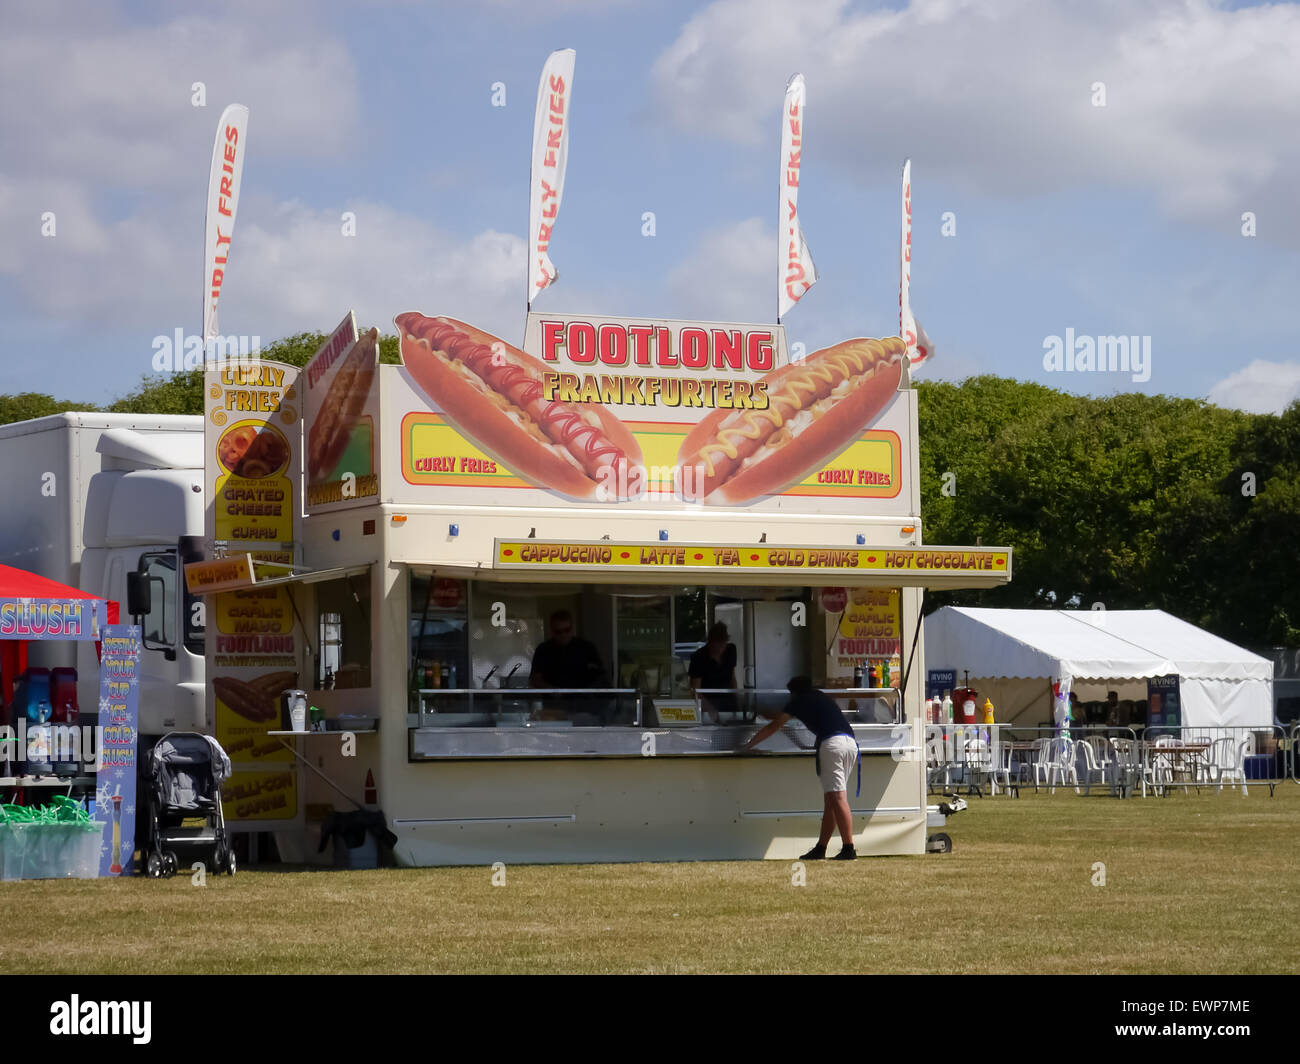 A footlong frankfurter fast food stall at a country fair Stock Photo